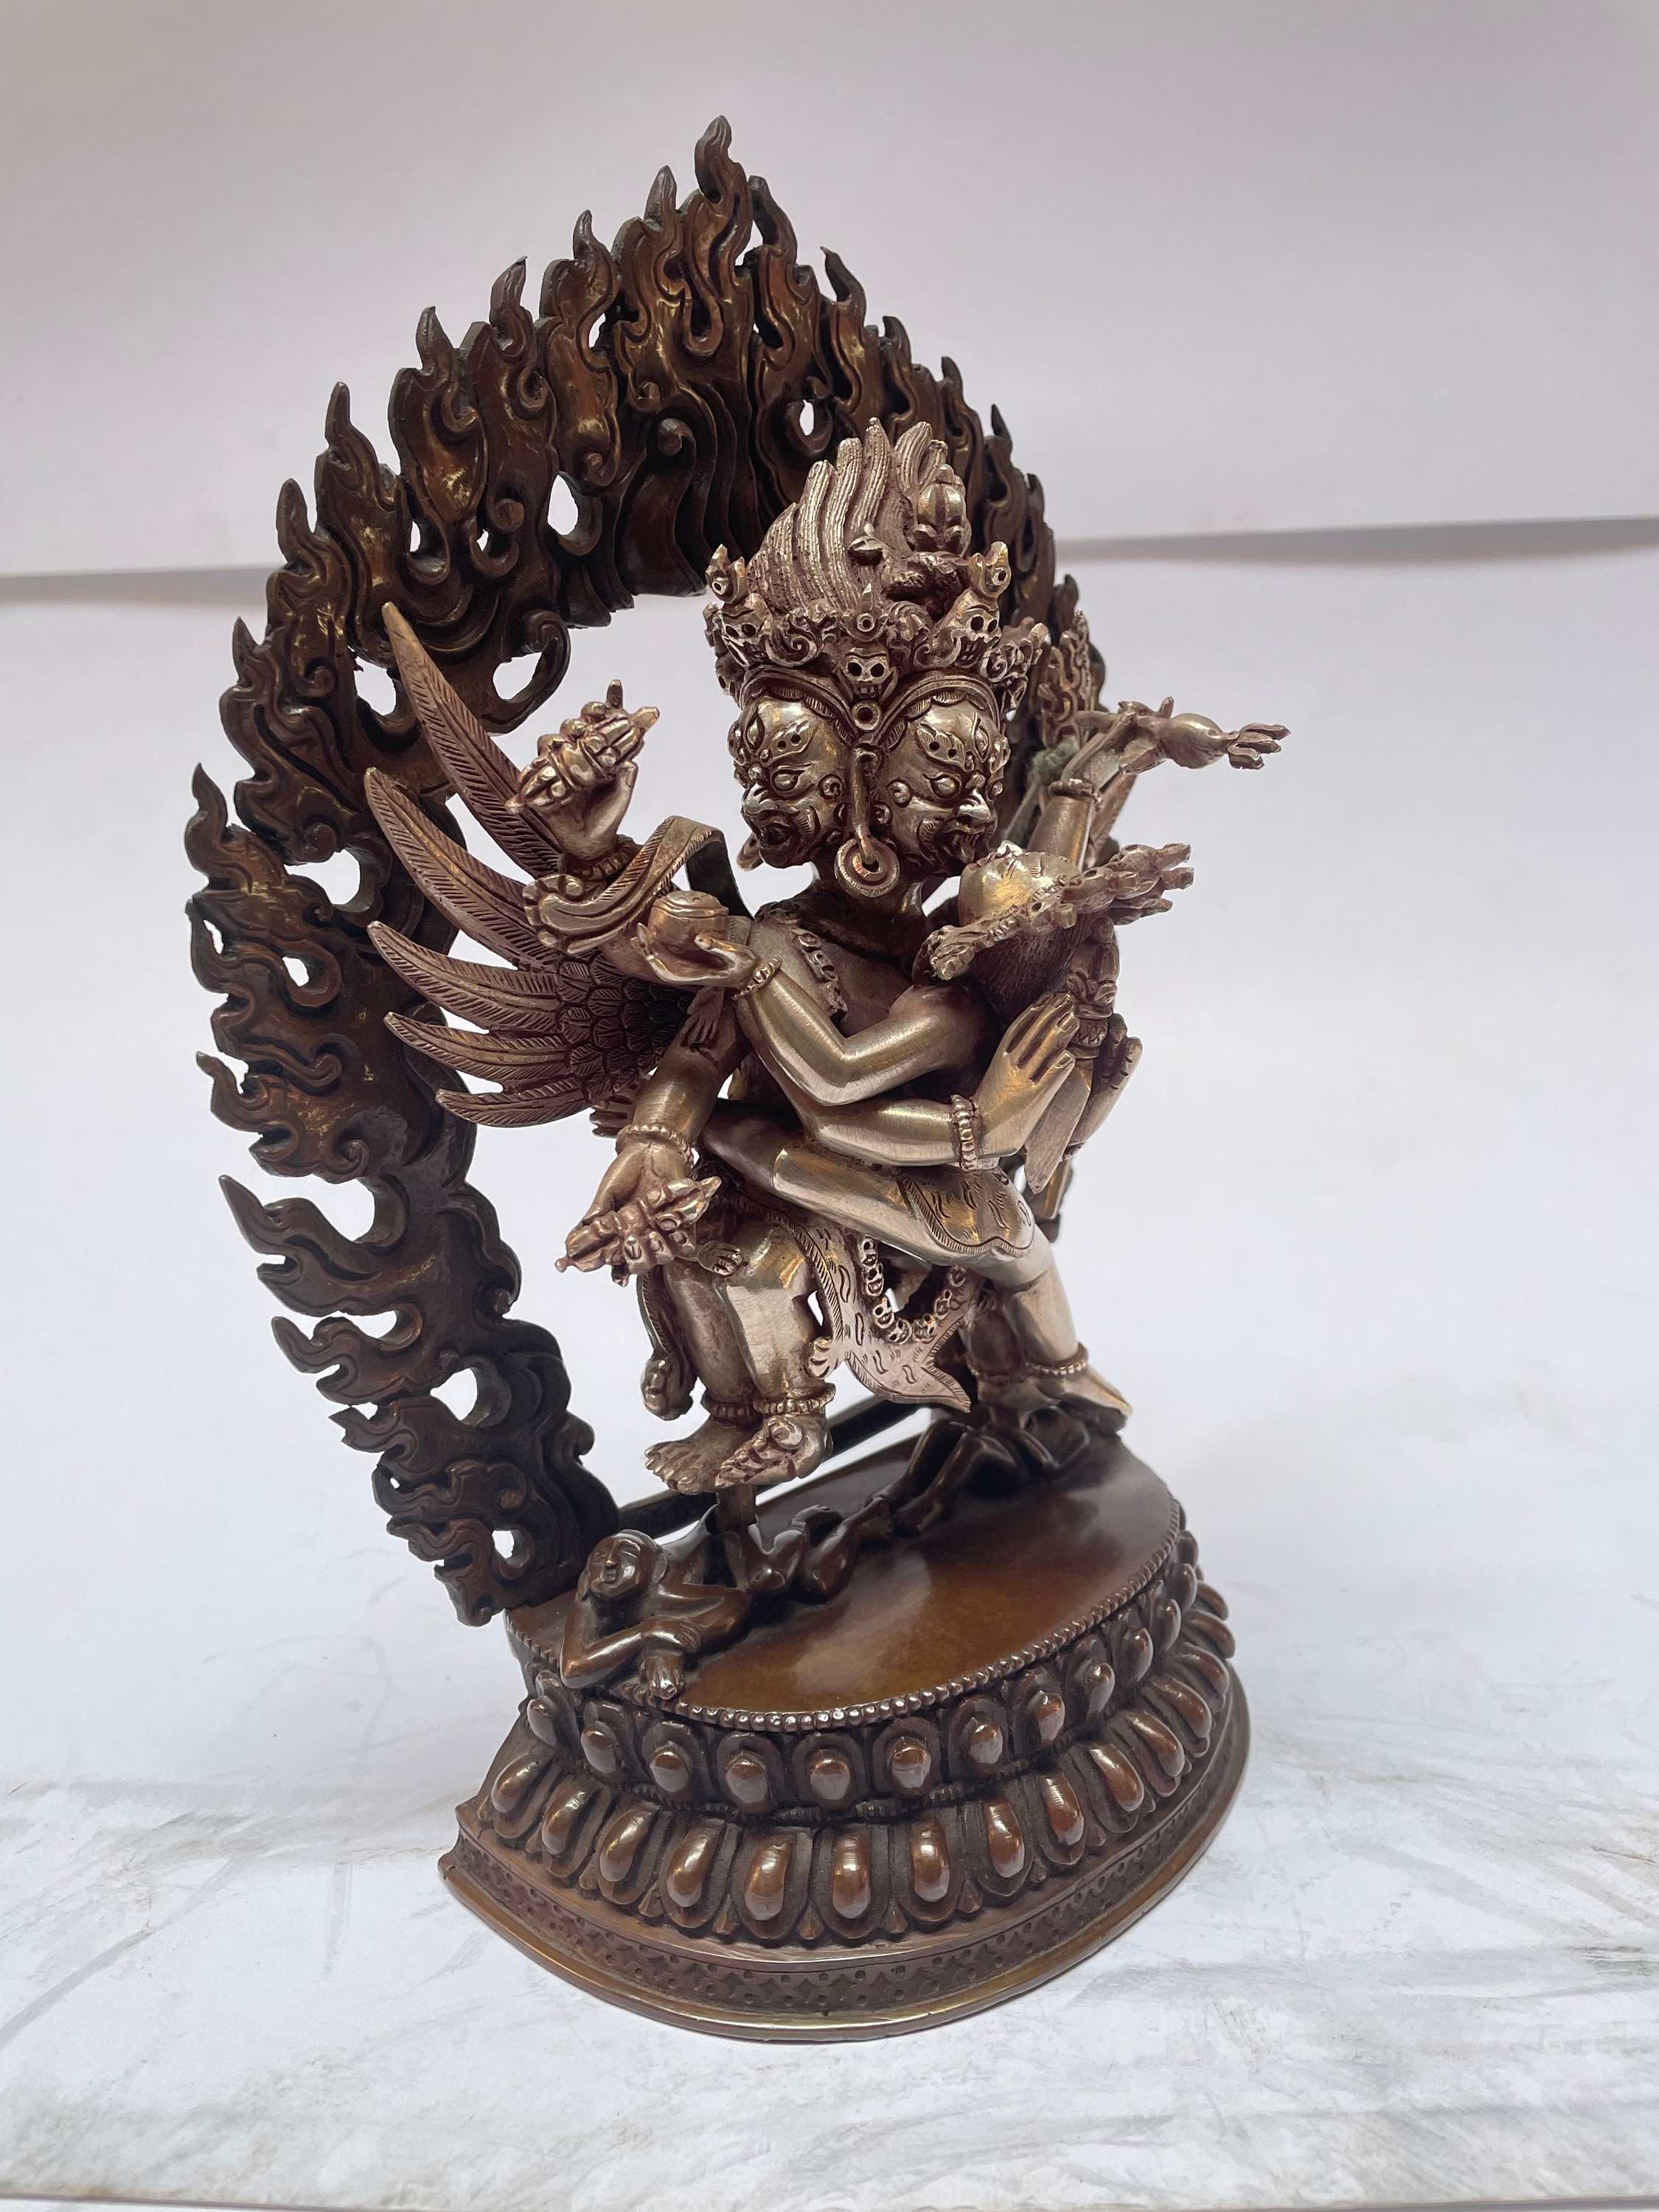 master Quality, Sterling Silver, 1258 Gram And Copper Statue Of Vajrakilaya - Dorje Phurba - Heruka, old Stock